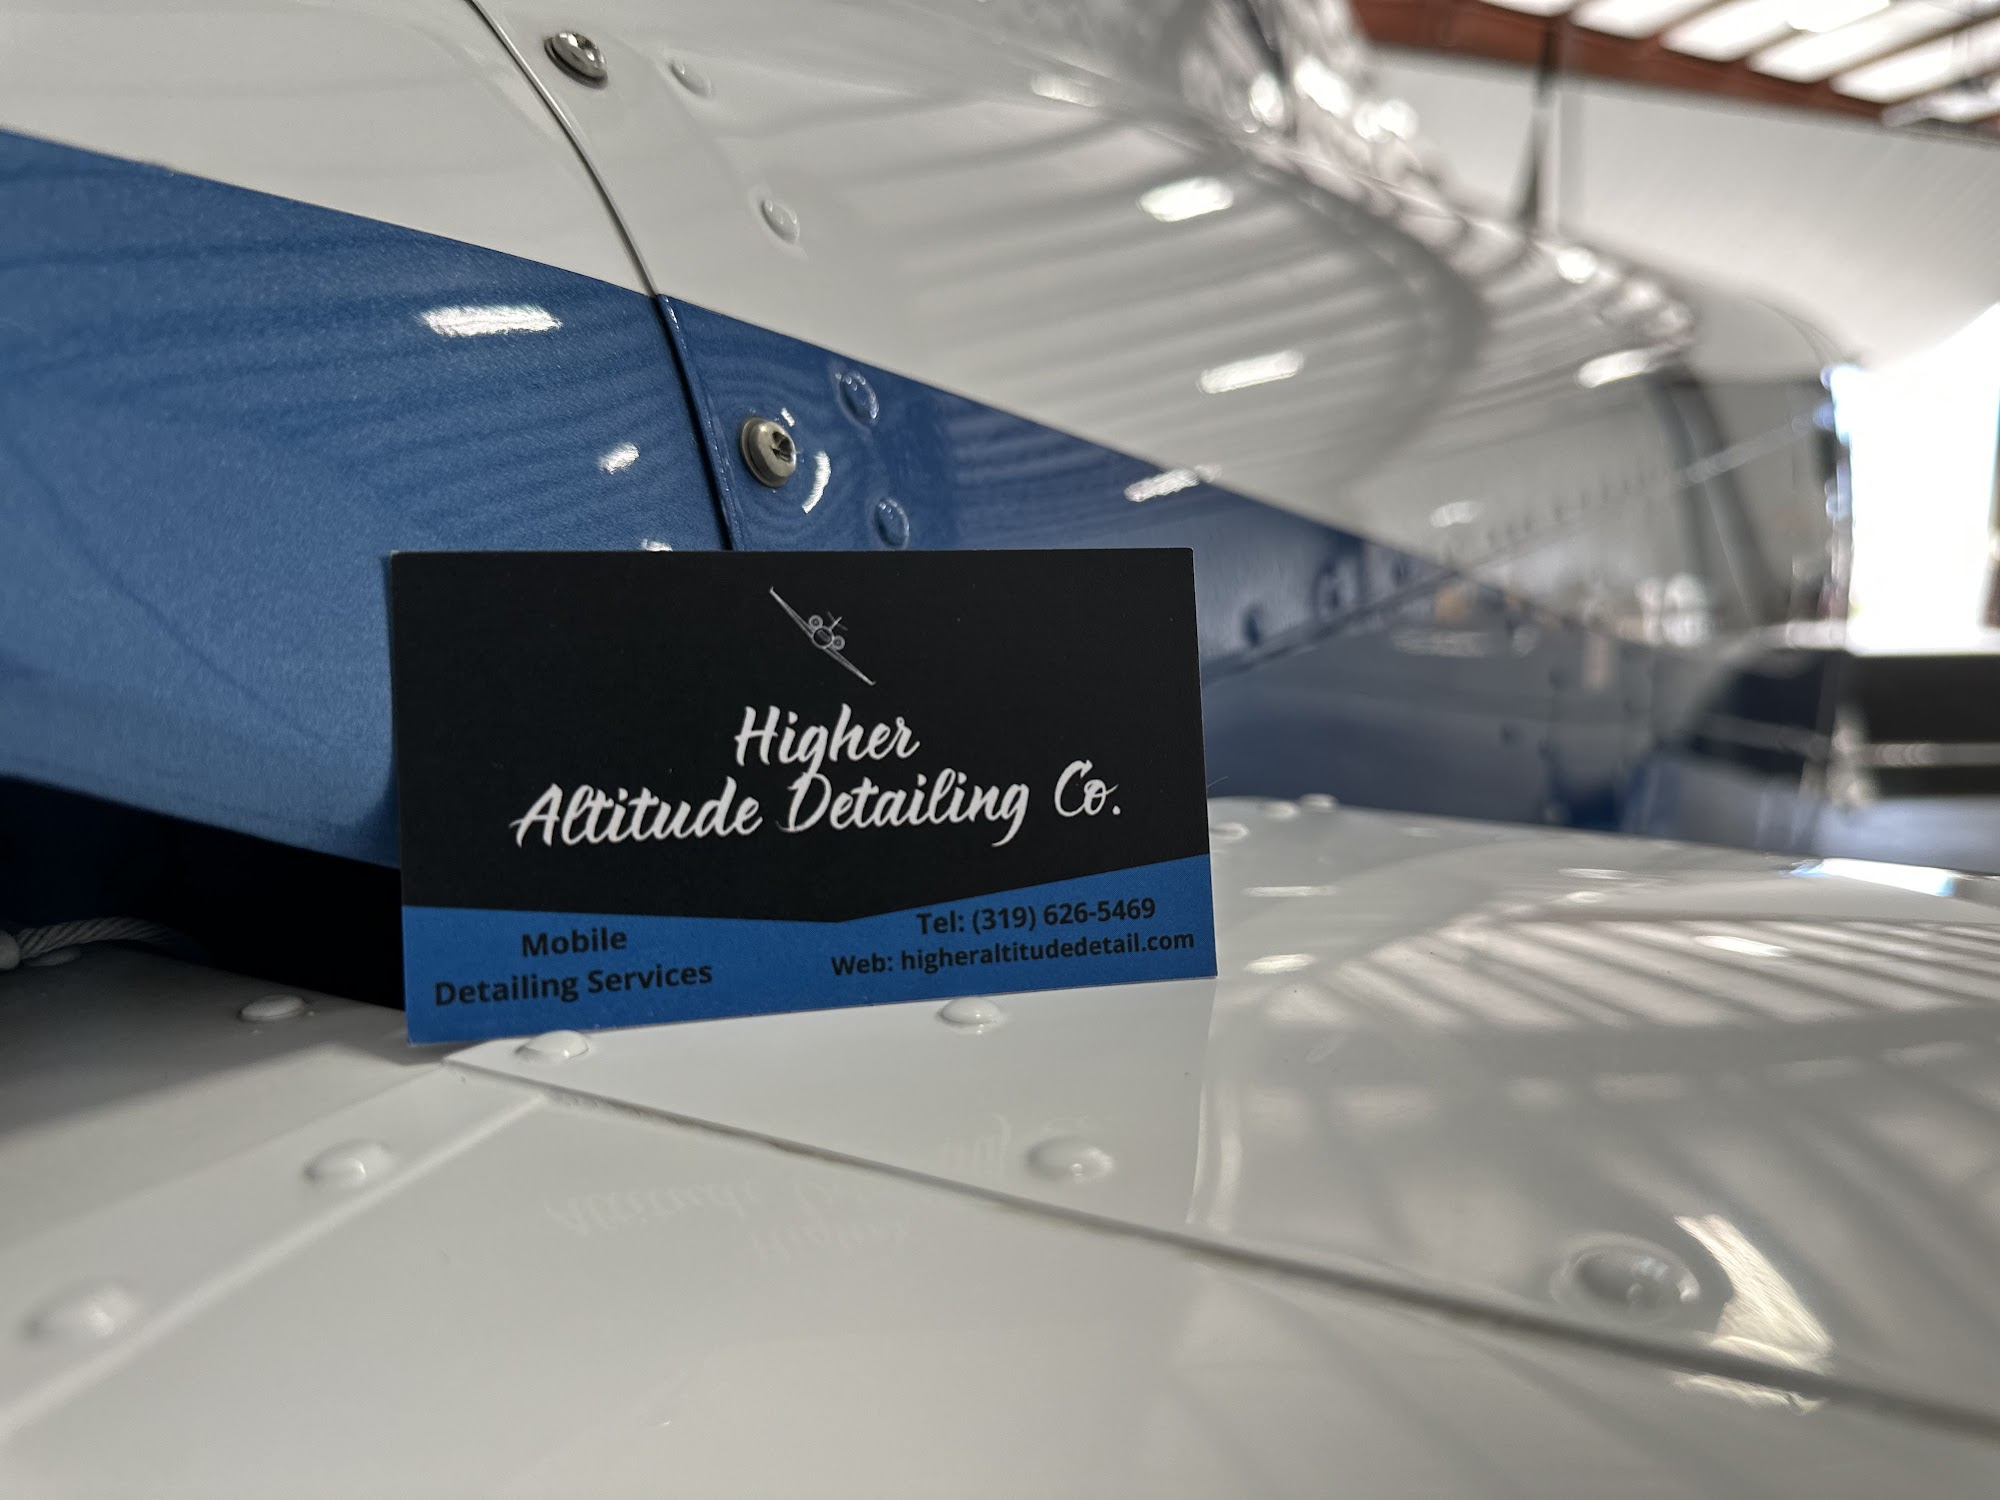 Higher Altitude Detailing Company